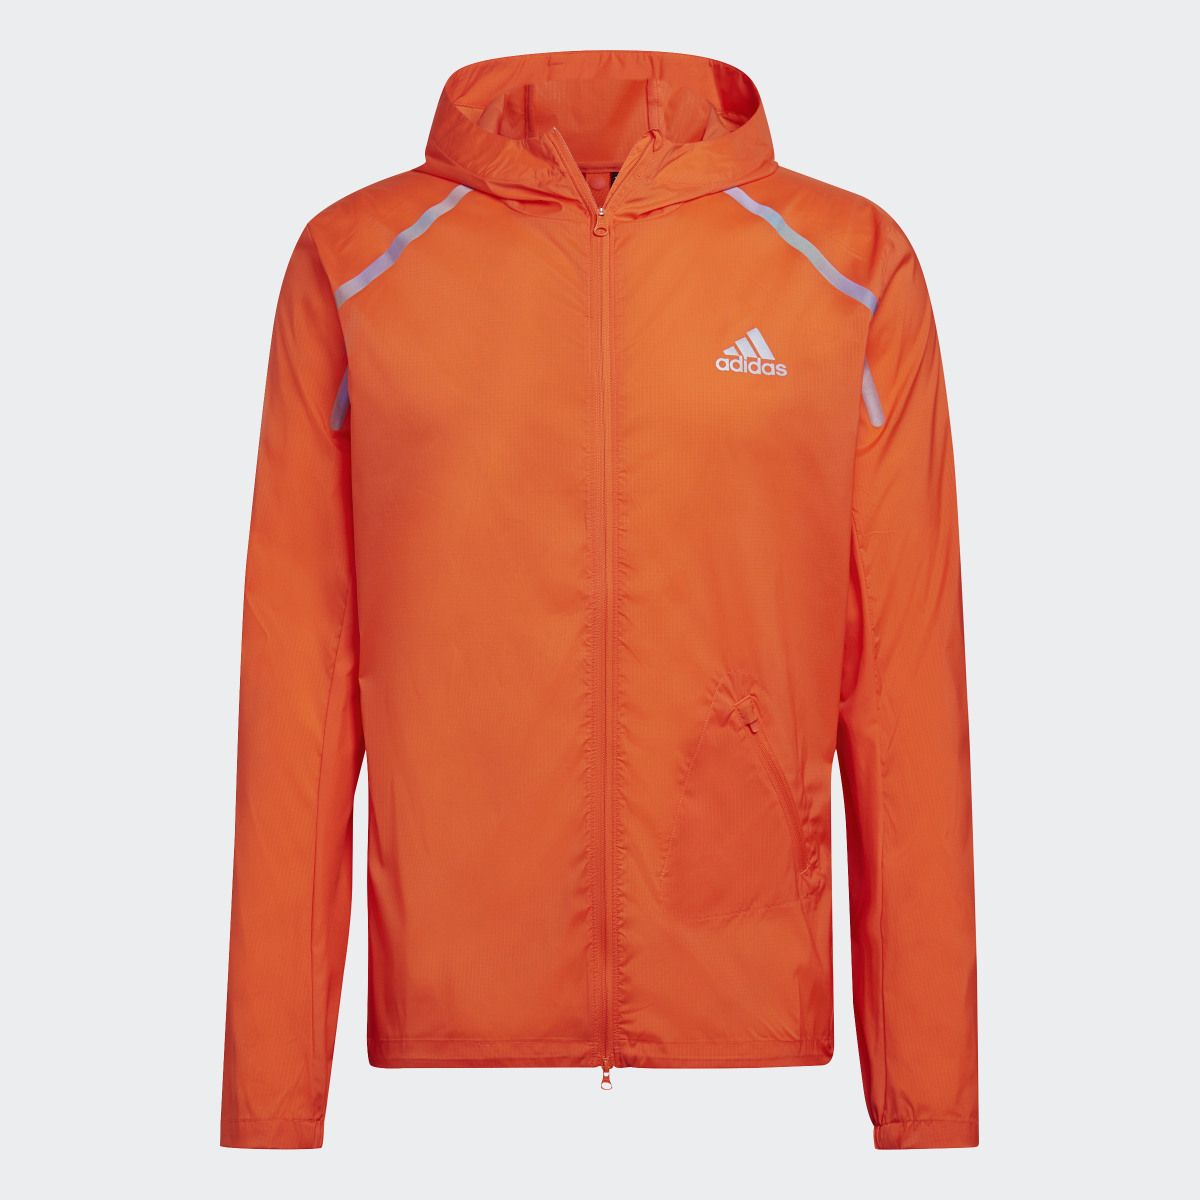 Adidas Marathon Running Jacket. 5